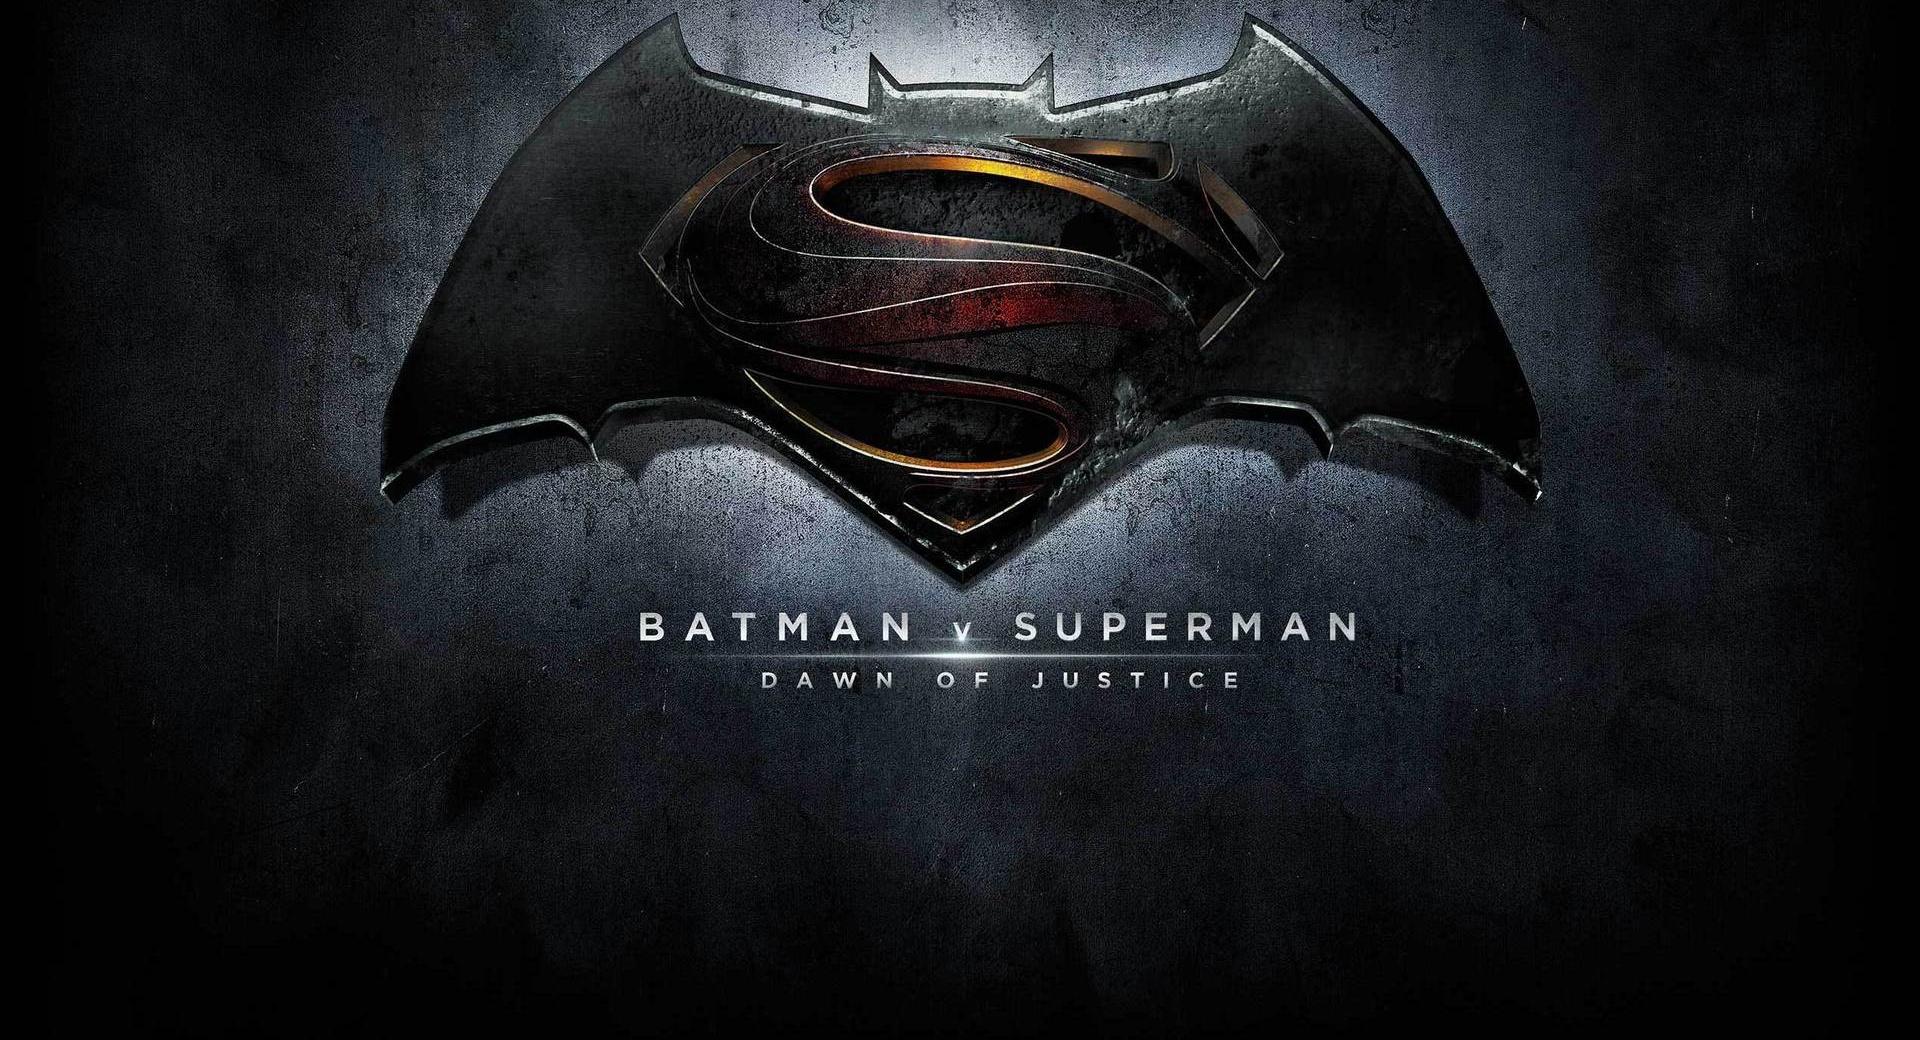 Batman VS Superman Logo at 1024 x 1024 iPad size wallpapers HD quality